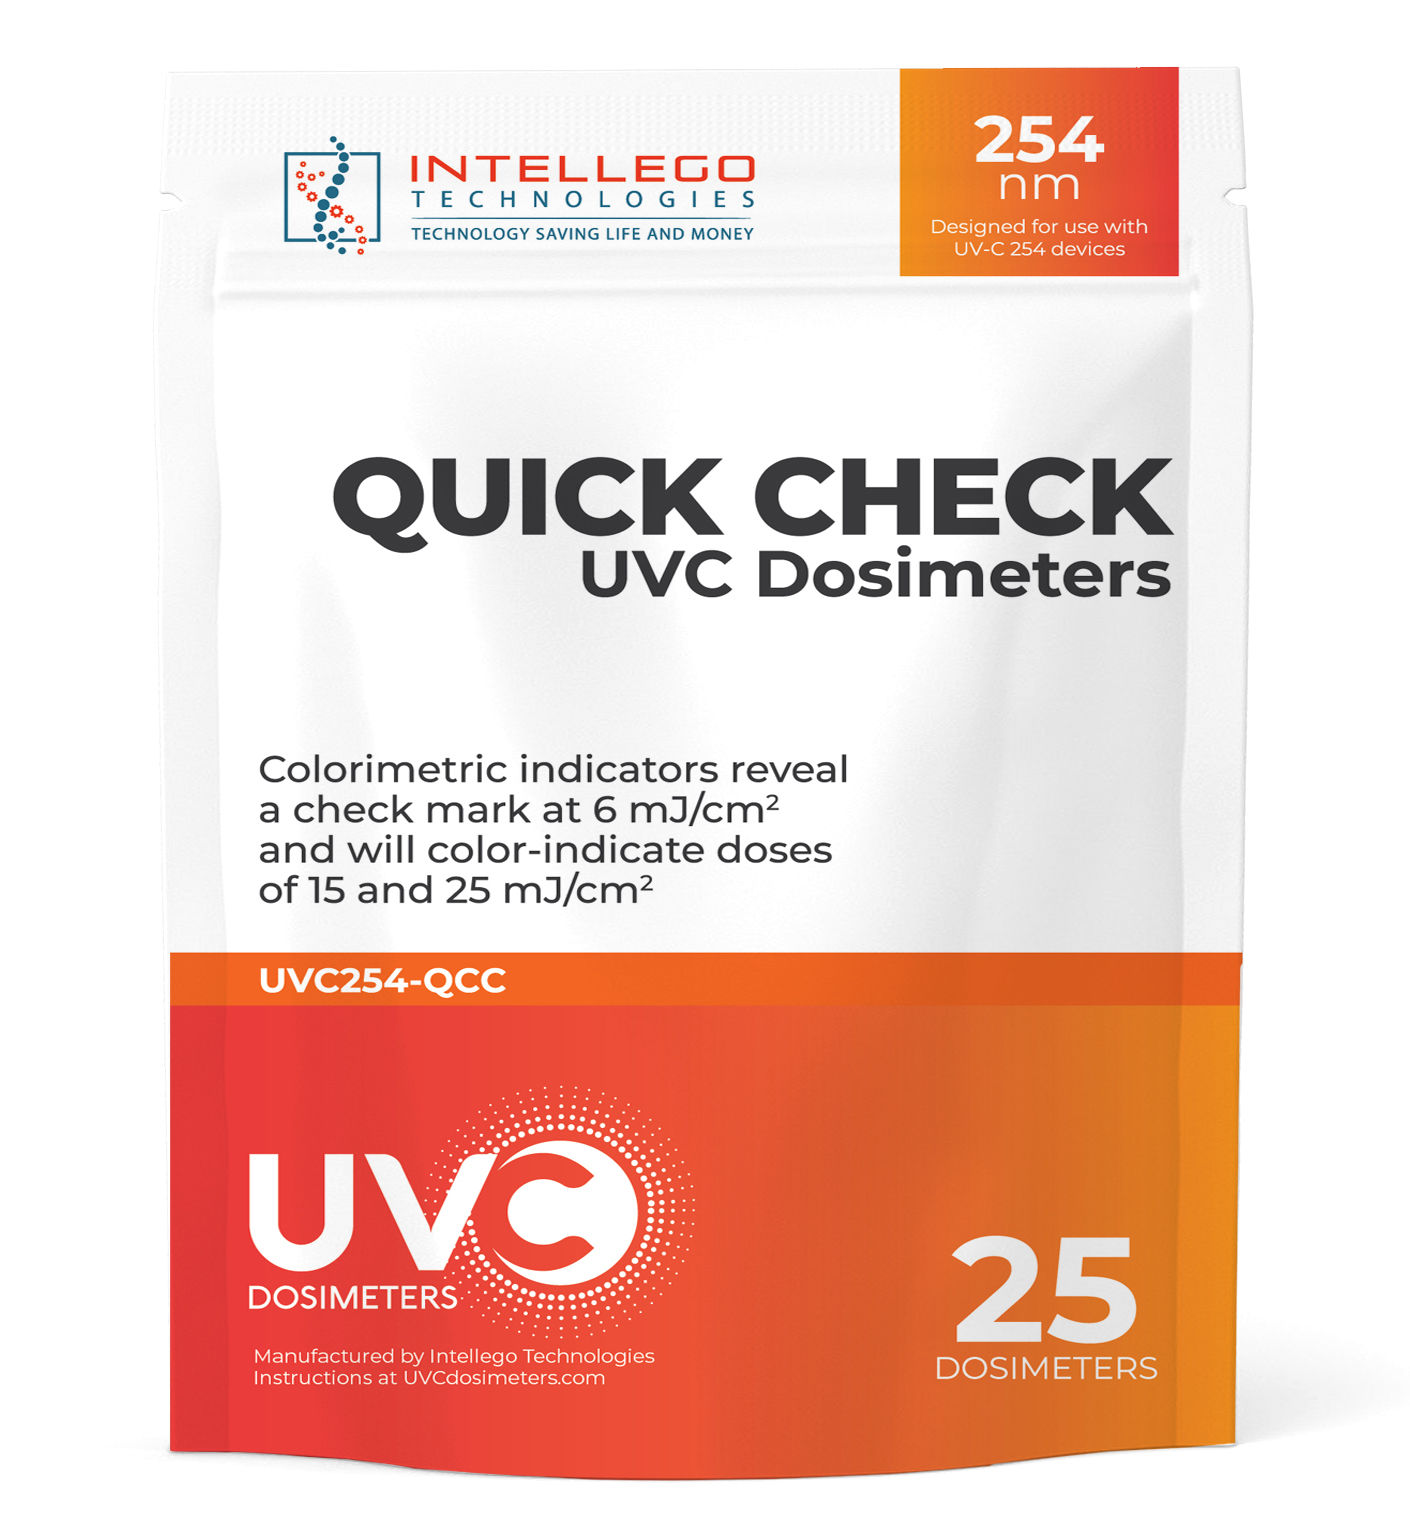 254 QuickCheck dosimeter packaging